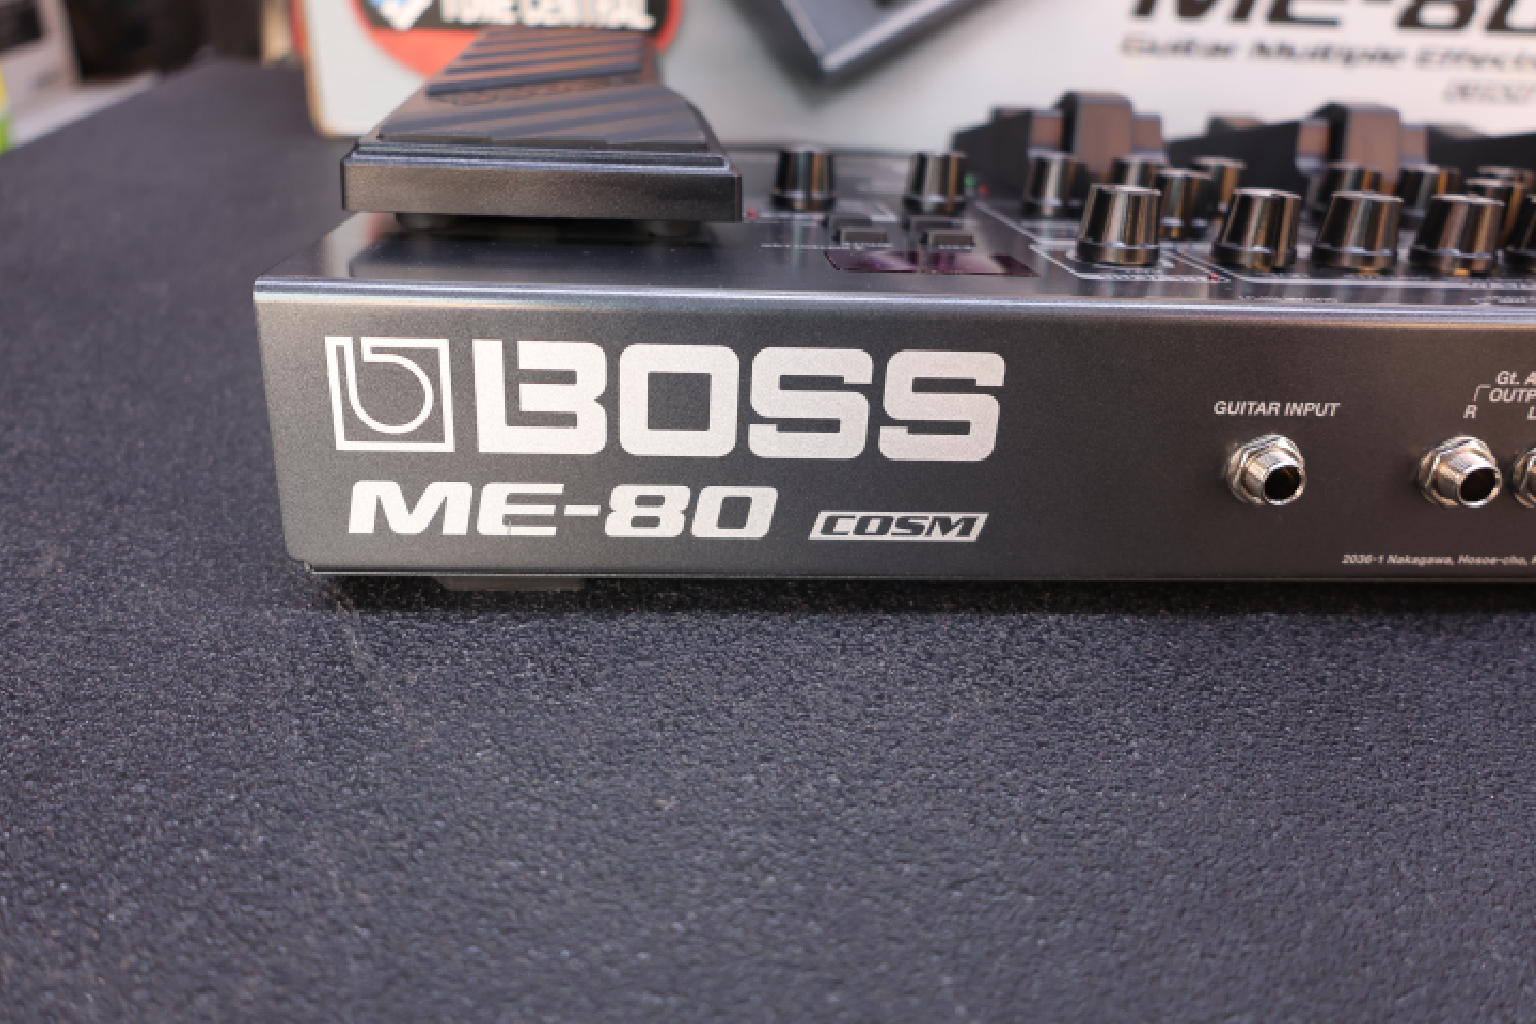 Boss ME-80 amp models